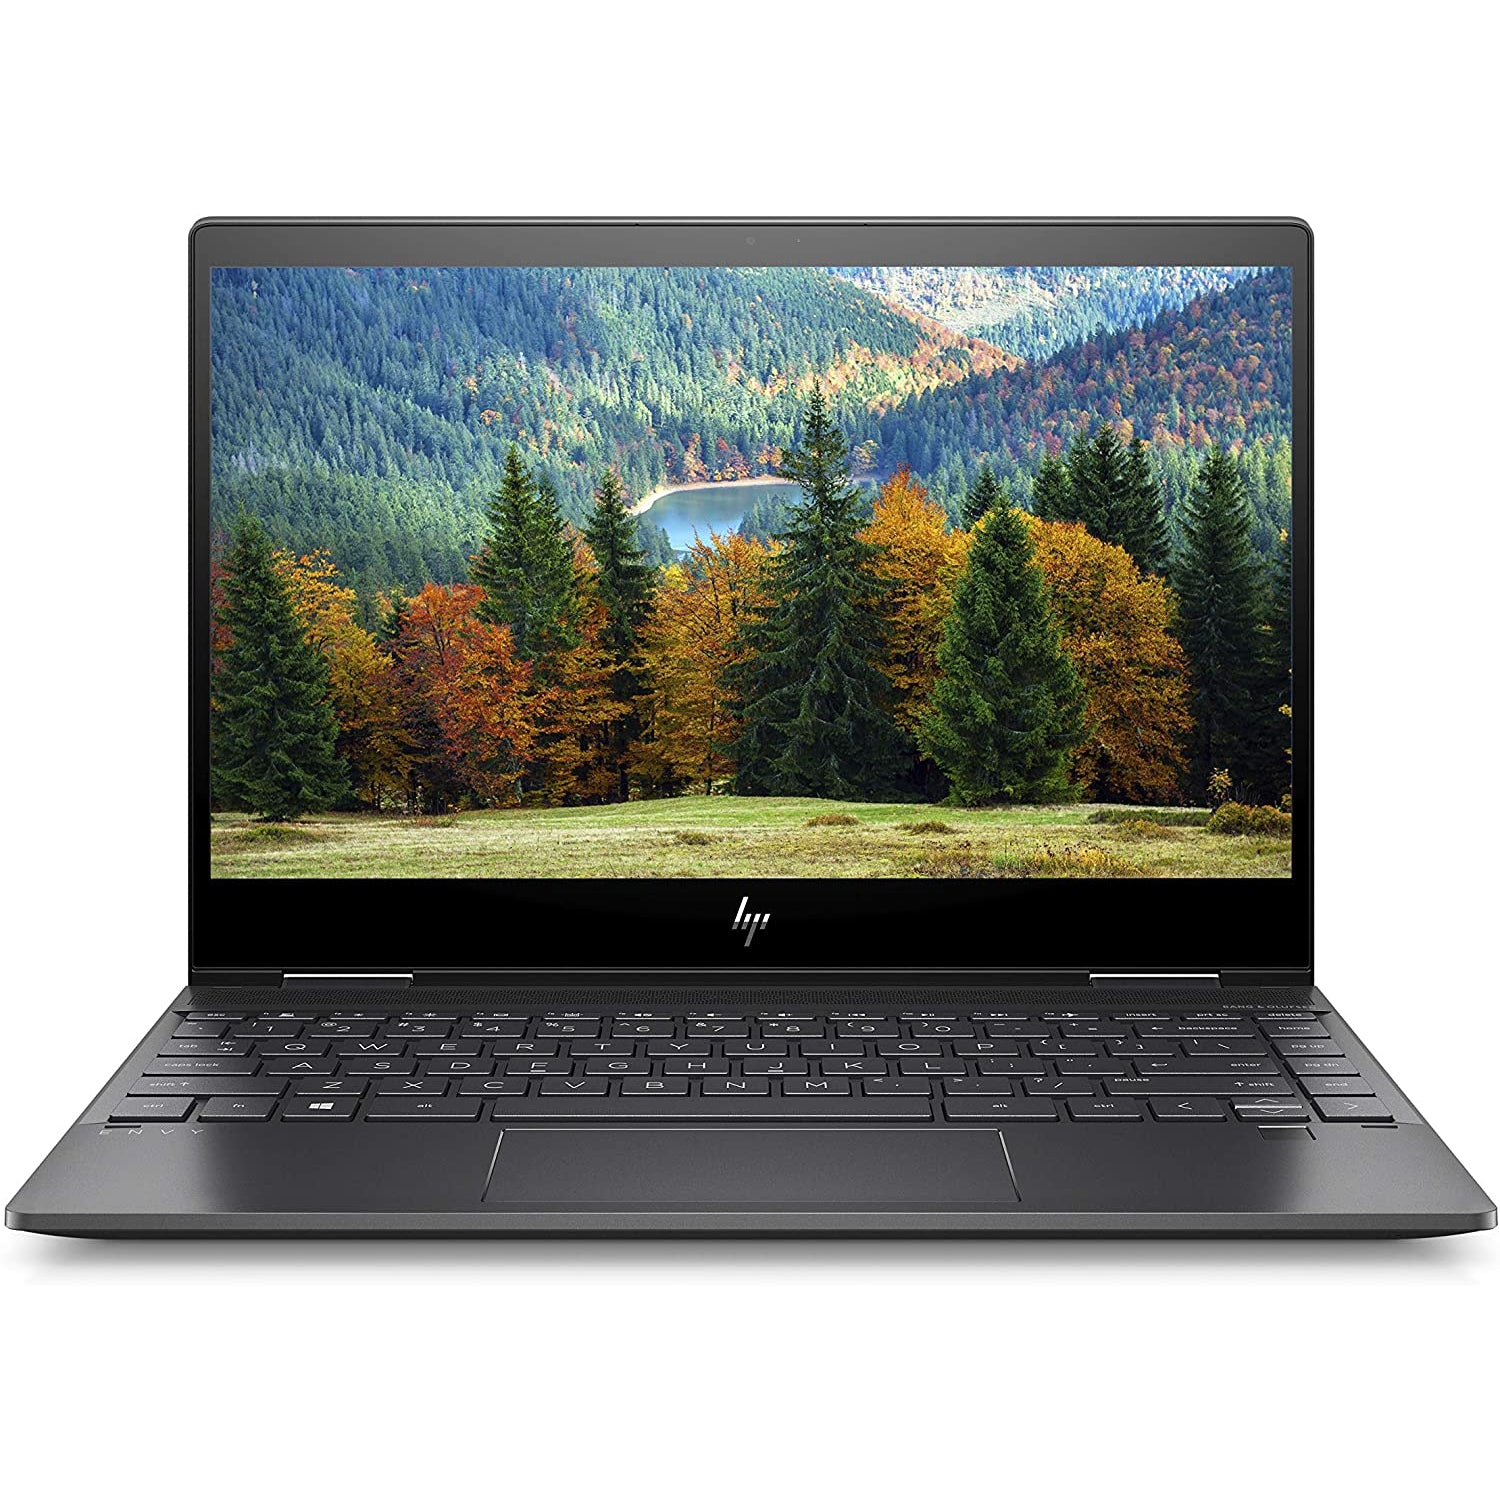 HP ENVY x360 13-ar0001na 13.3 Inch FHD Touch-Screen Convertible Laptop - (Black) (AMD Ryzen 5-3500U Quad Core